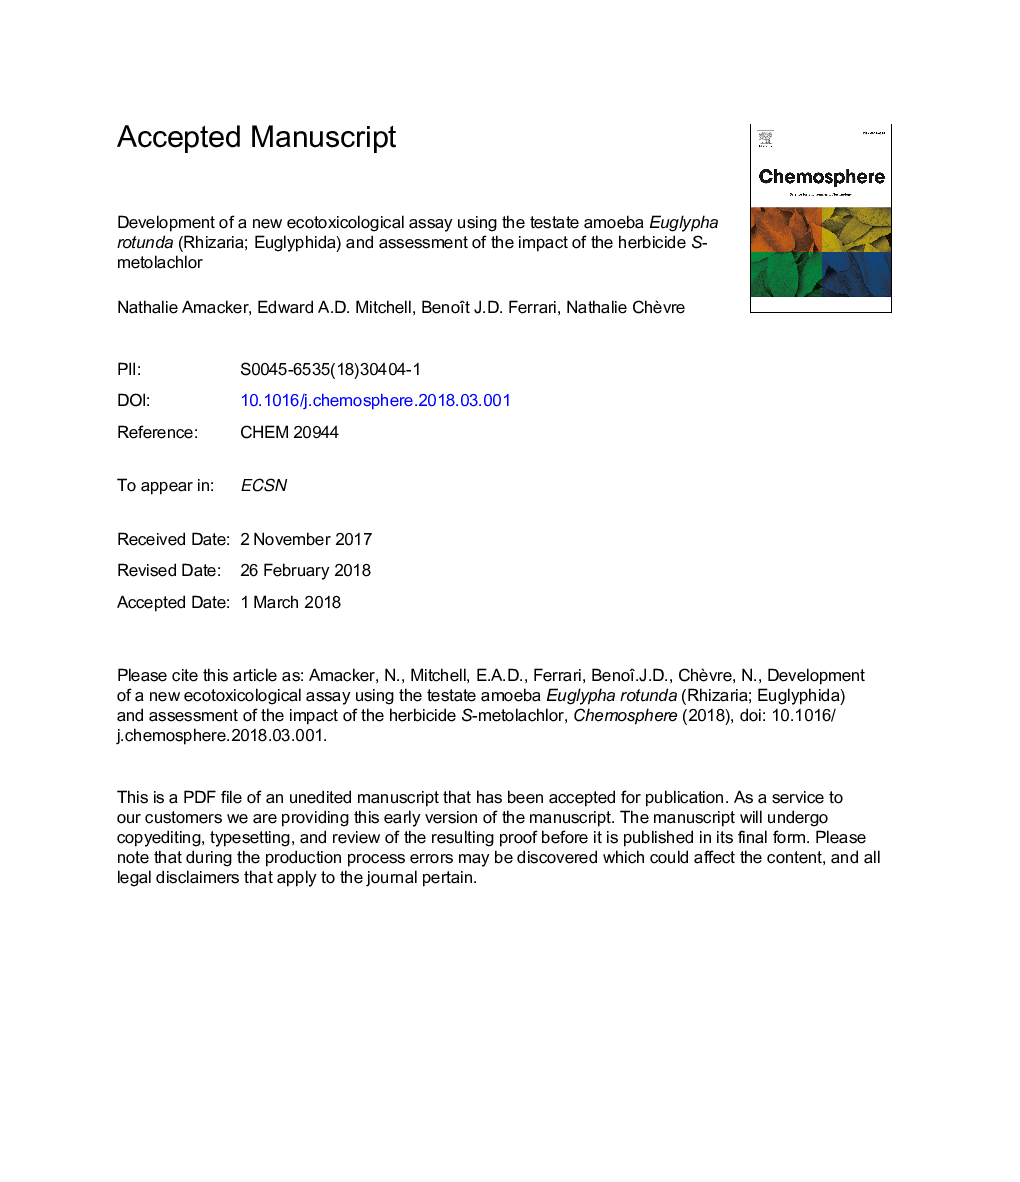 Development of a new ecotoxicological assay using the testate amoeba Euglypha rotunda (Rhizaria; Euglyphida) and assessment of the impact of the herbicide S-metolachlor